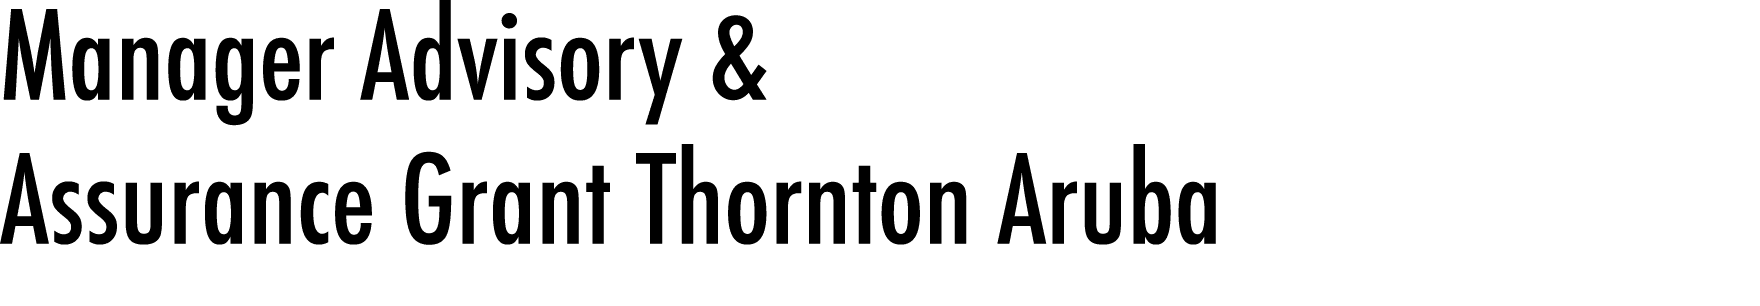 Manager Advisory & Assurance Grant Thornton Aruba 